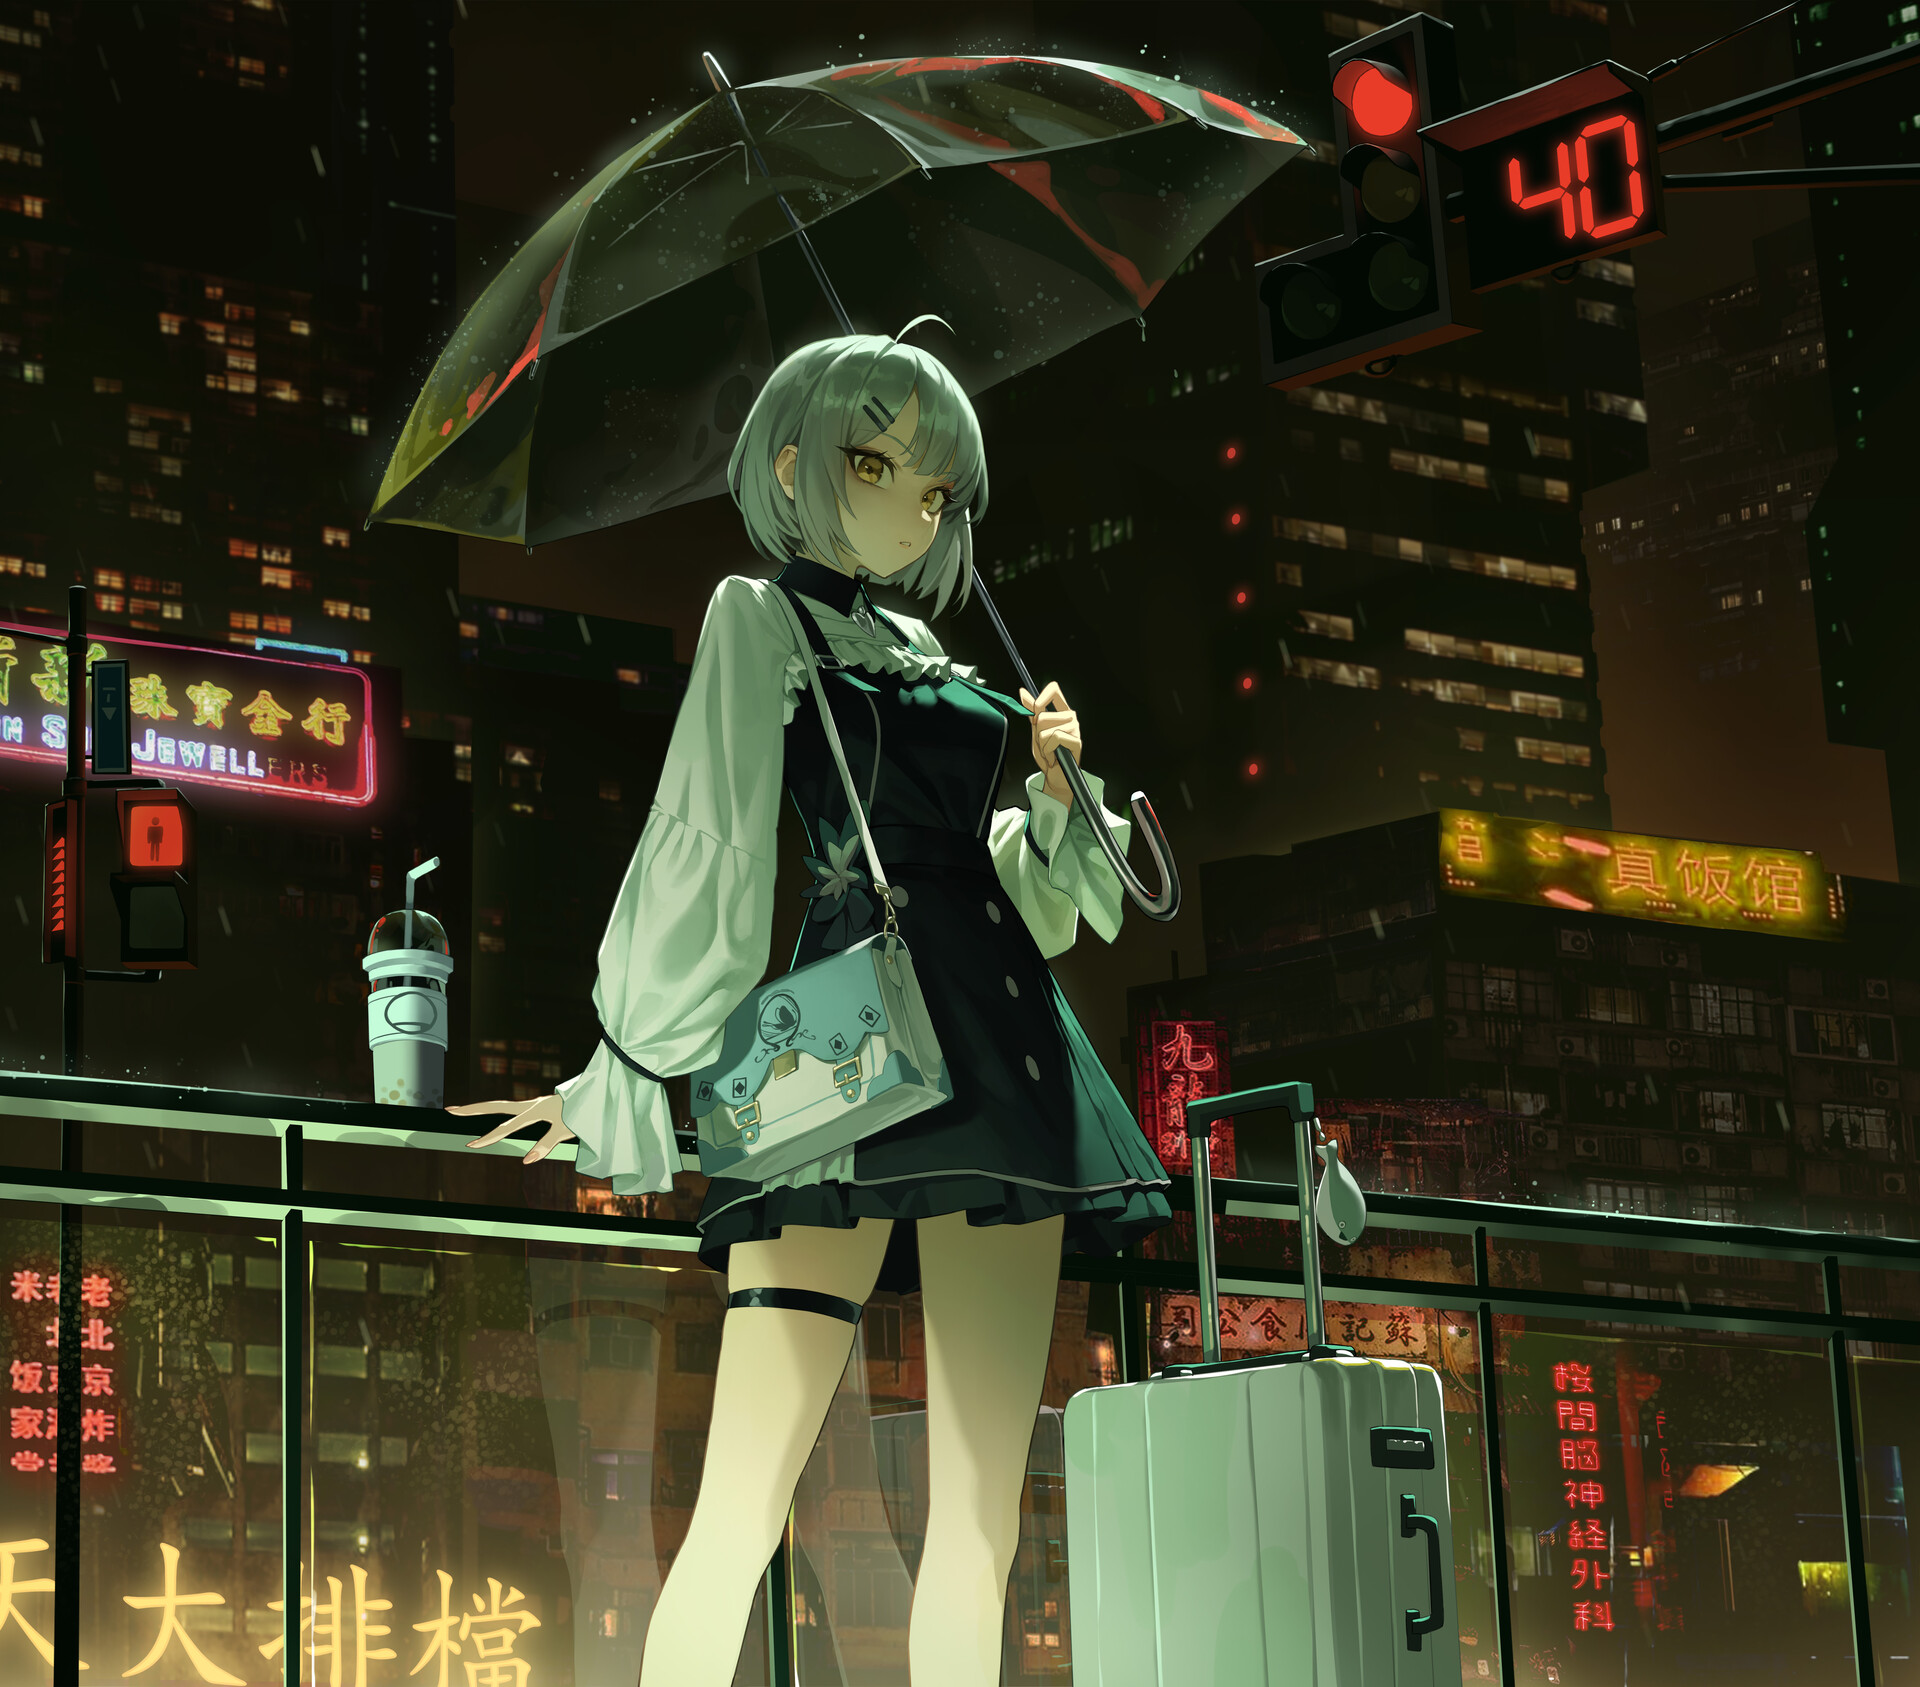 Digital Art Artwork Illustration Anime Anime Girls Women Umbrella City Night Road Sign Looking At Vi 1920x1687